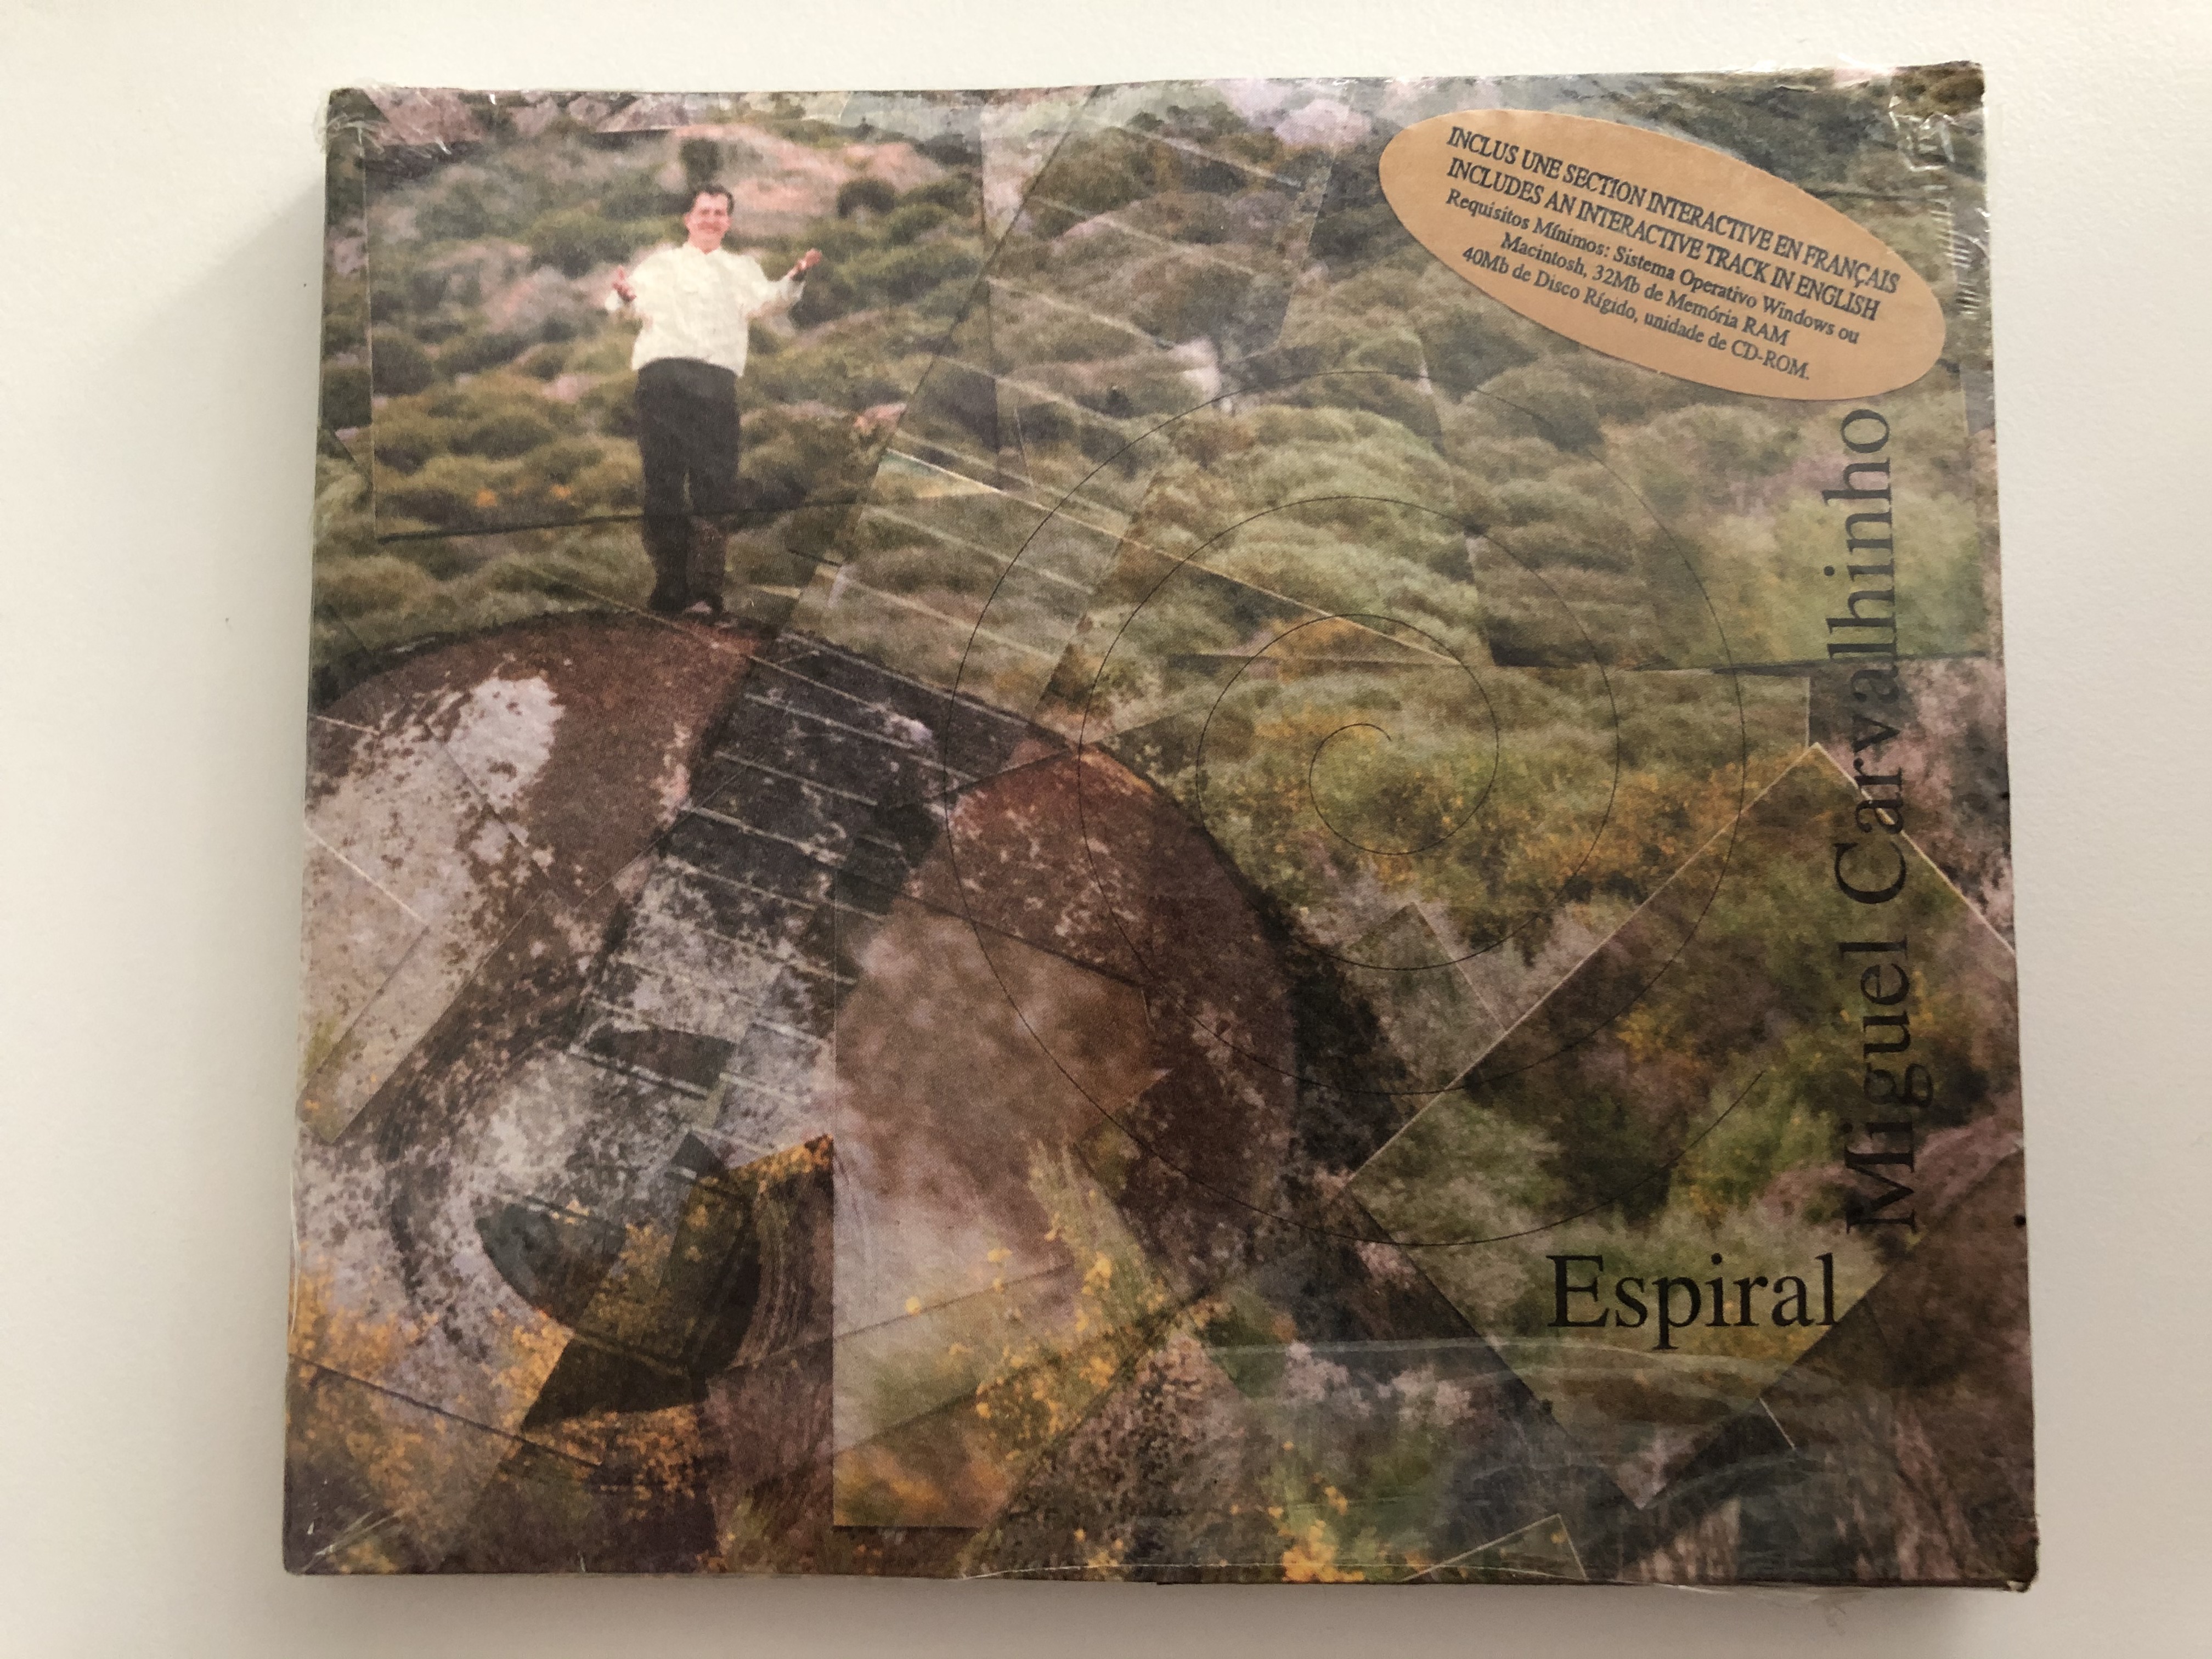 miguel-carvalhinho-espiral-inclus-une-selection-interactive-en-francais-includes-an-interactive-tracks-in-english-universal-music-portugal-audio-cd-2002-472583-2-1-.jpg